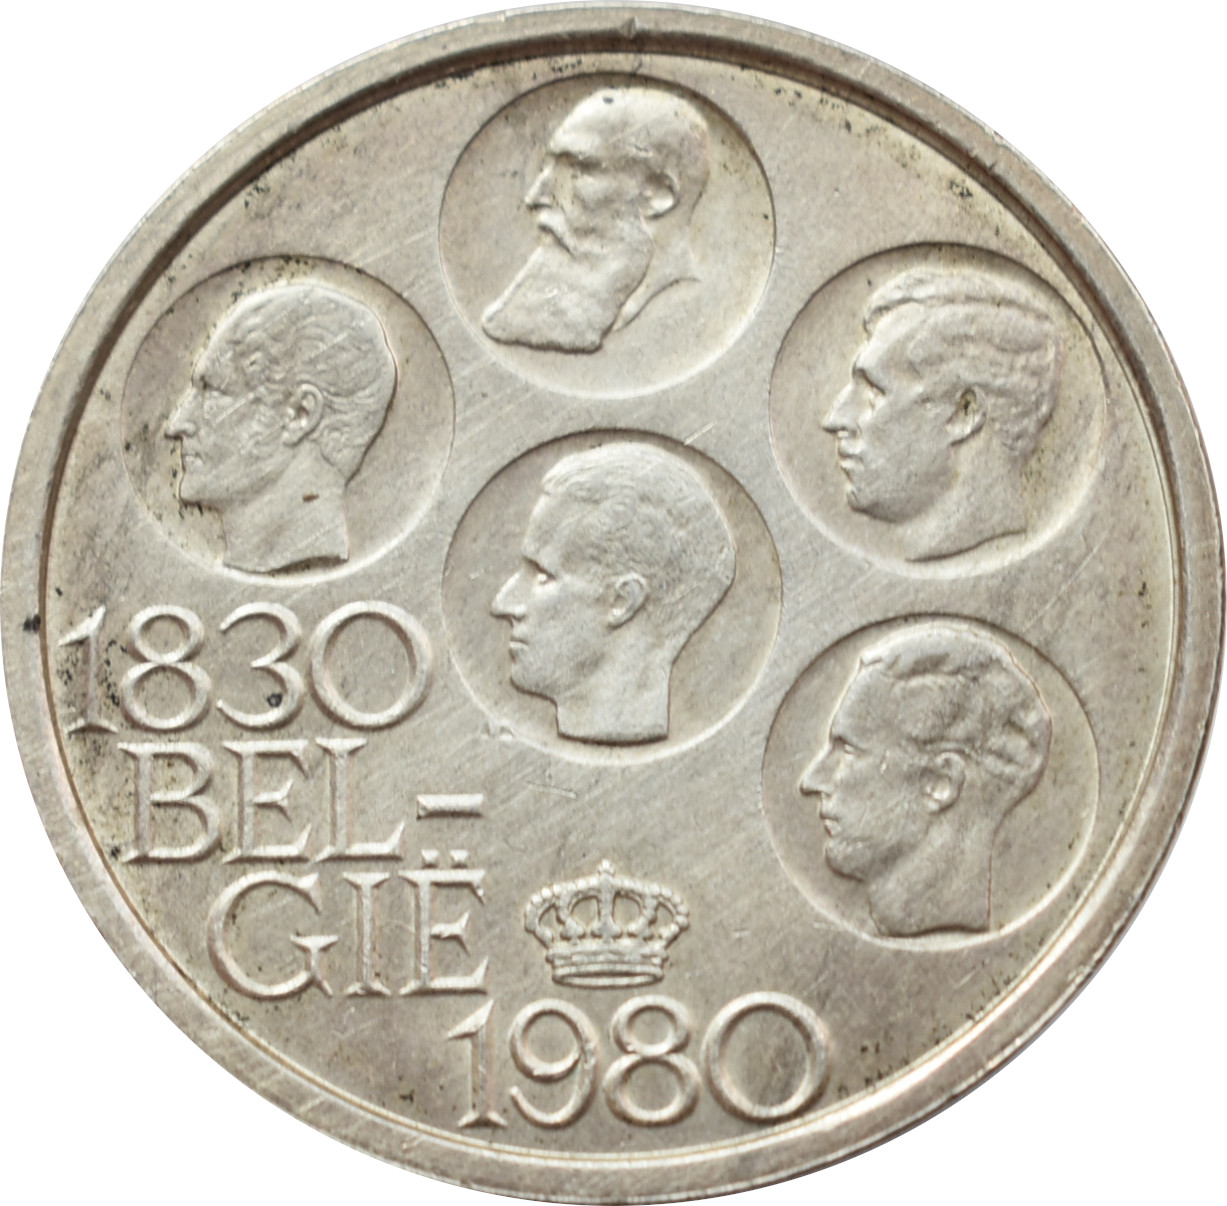 Belgicko 500 Francs 1980